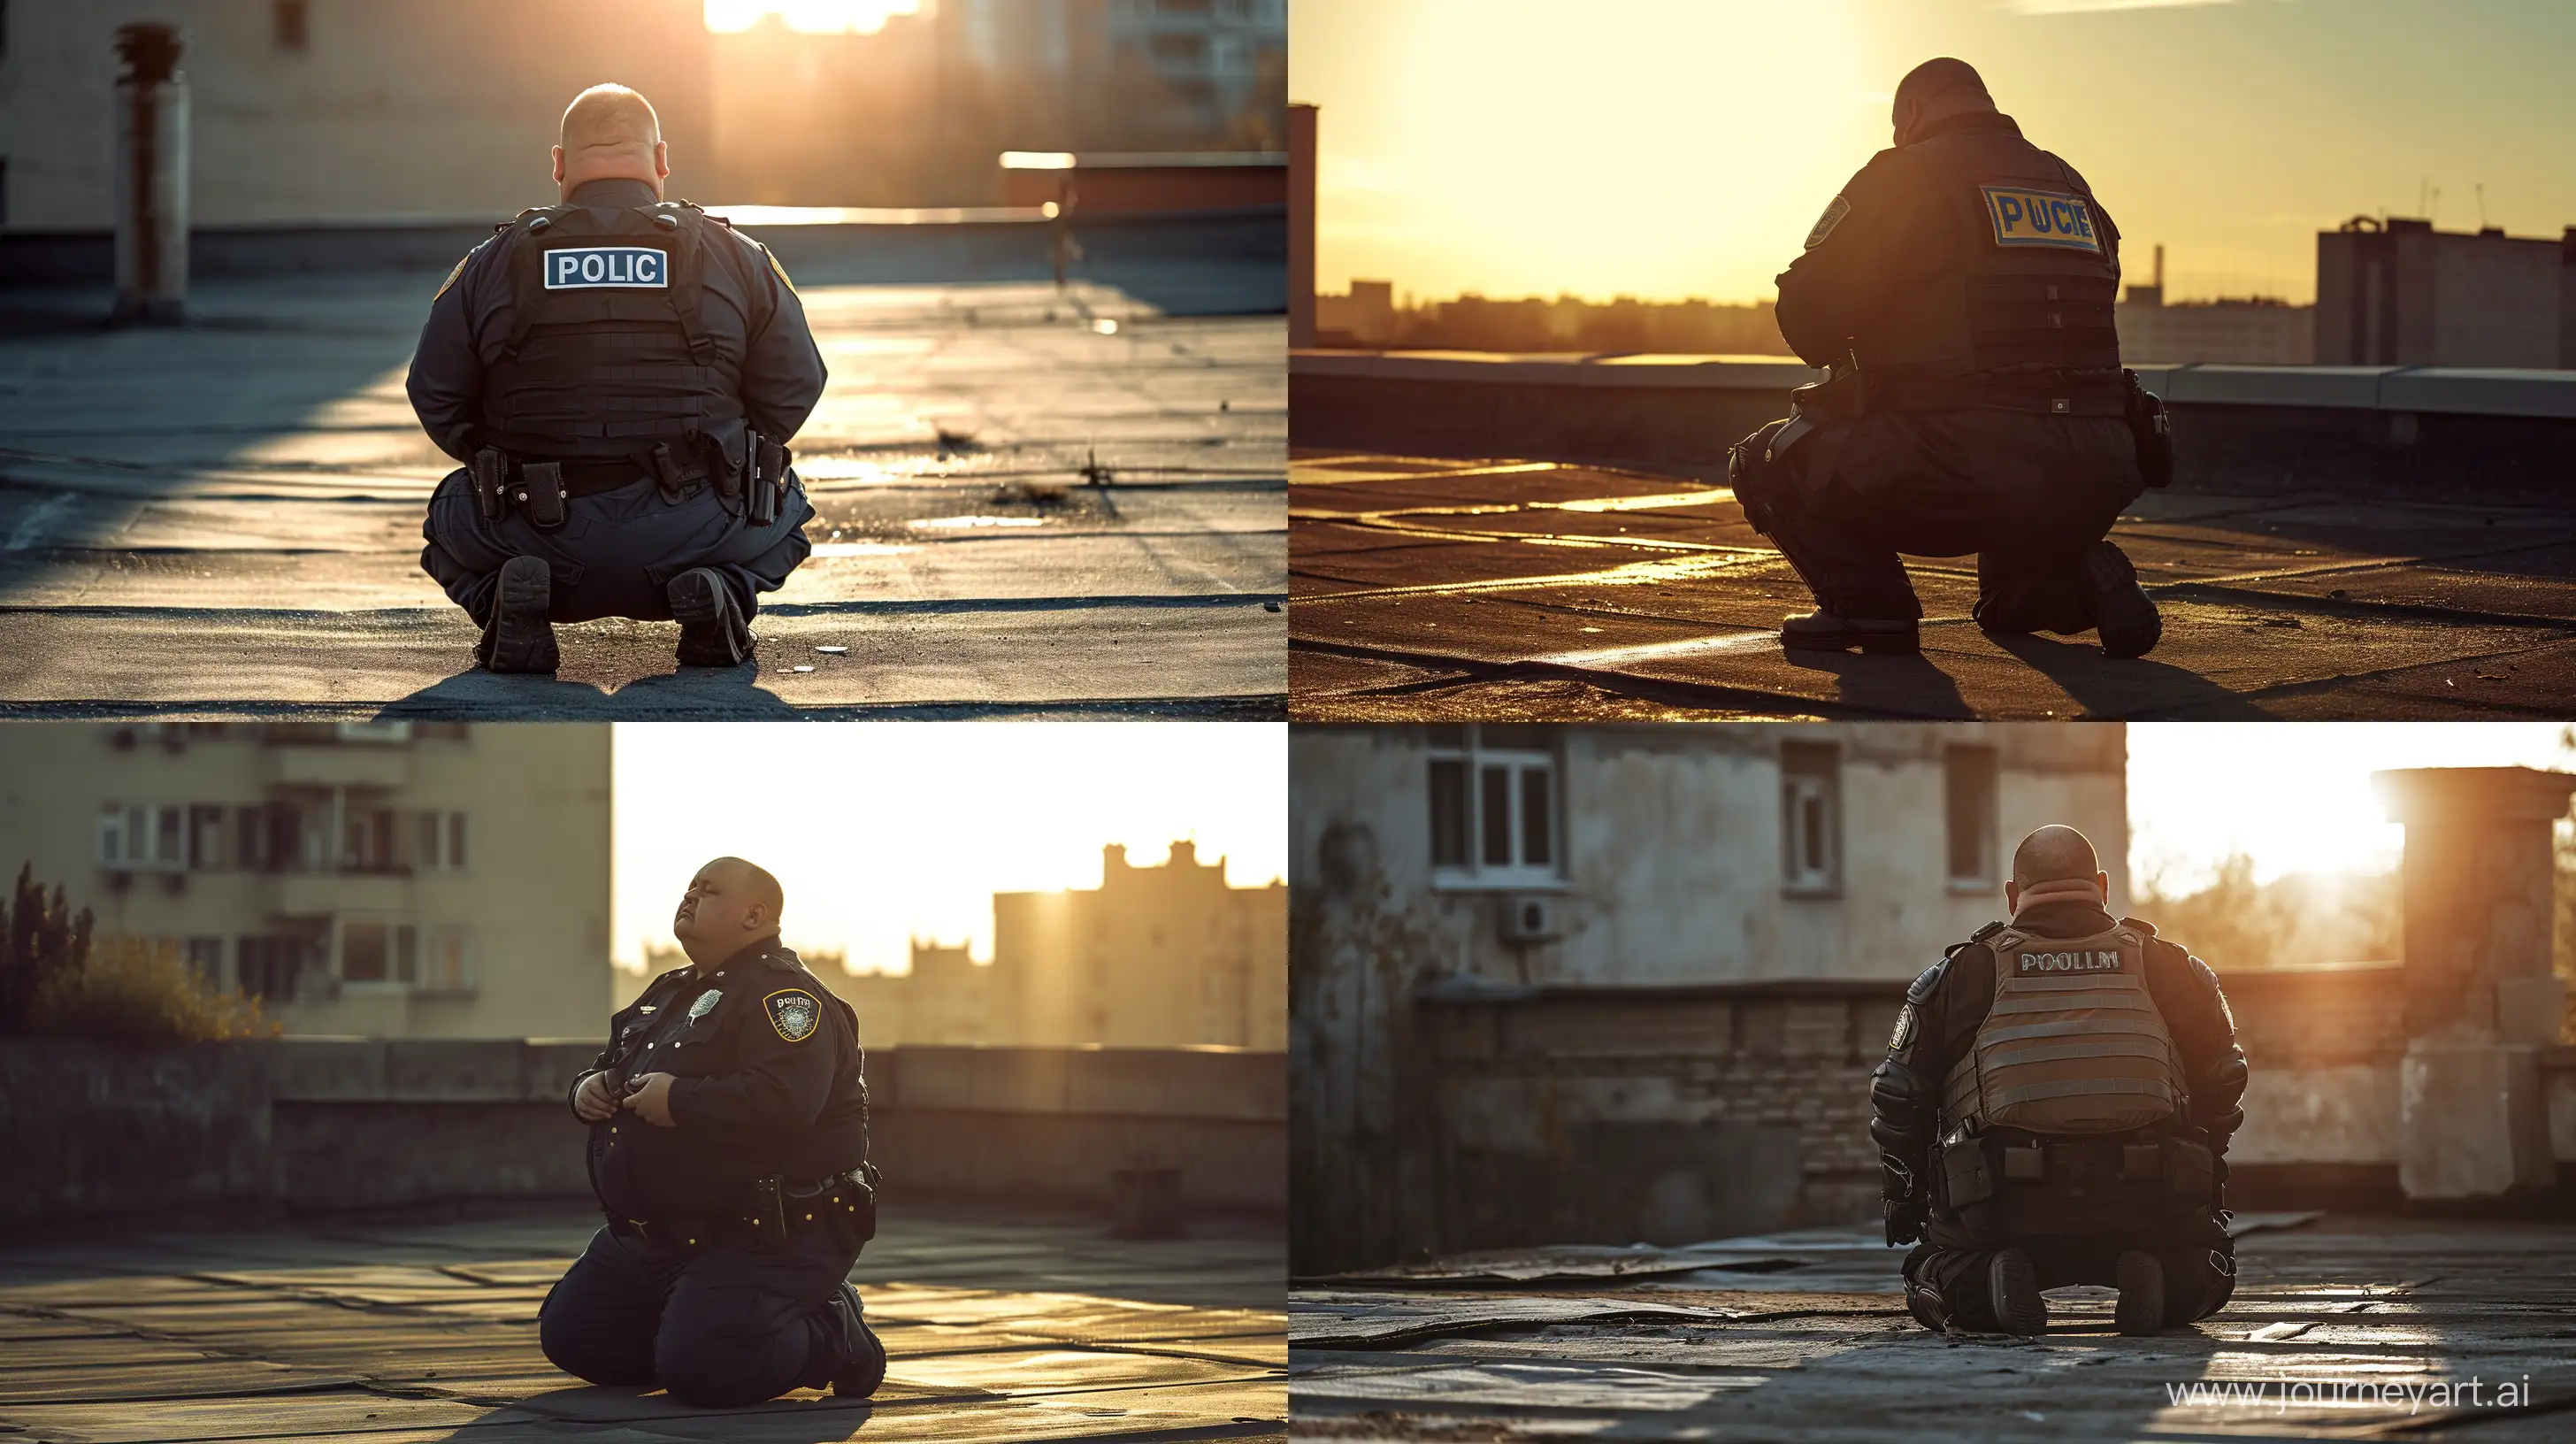 Elderly-Police-Officer-Kneeling-on-Rooftop-in-Sunlight